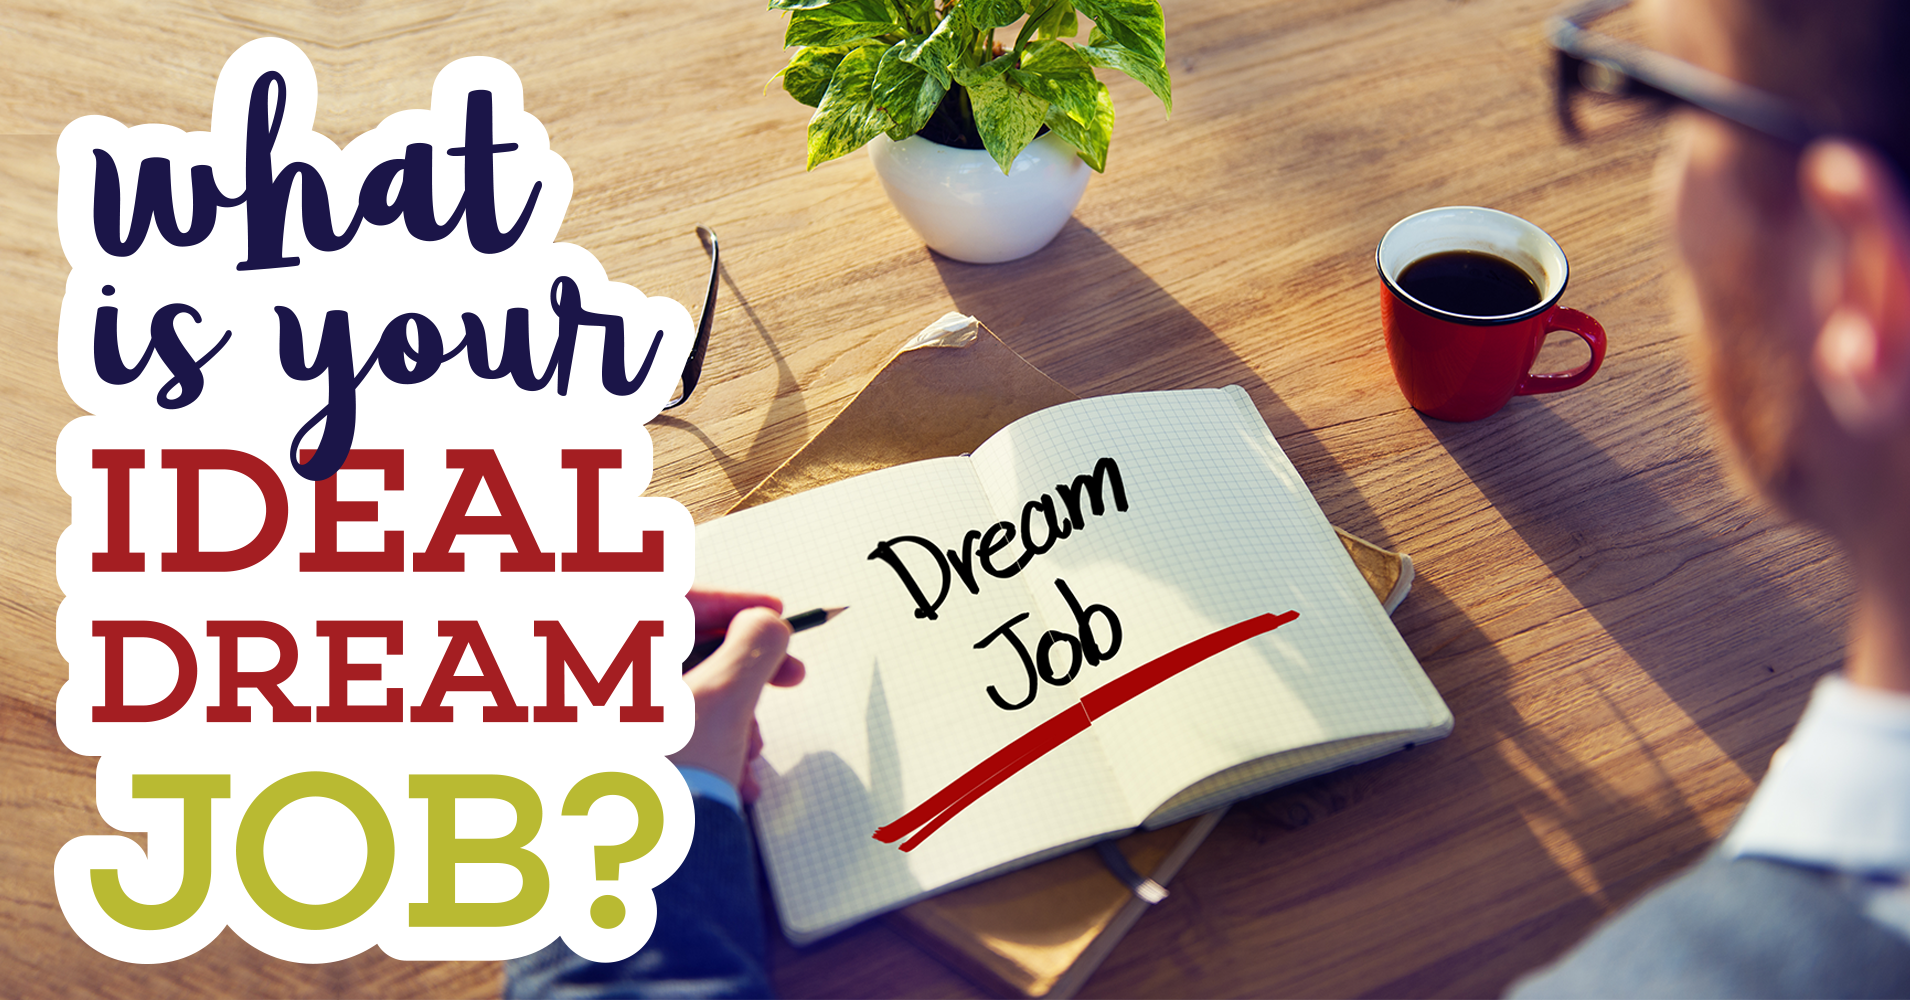 What Is Your Ideal Dream Job? - Quiz - Quizony.com